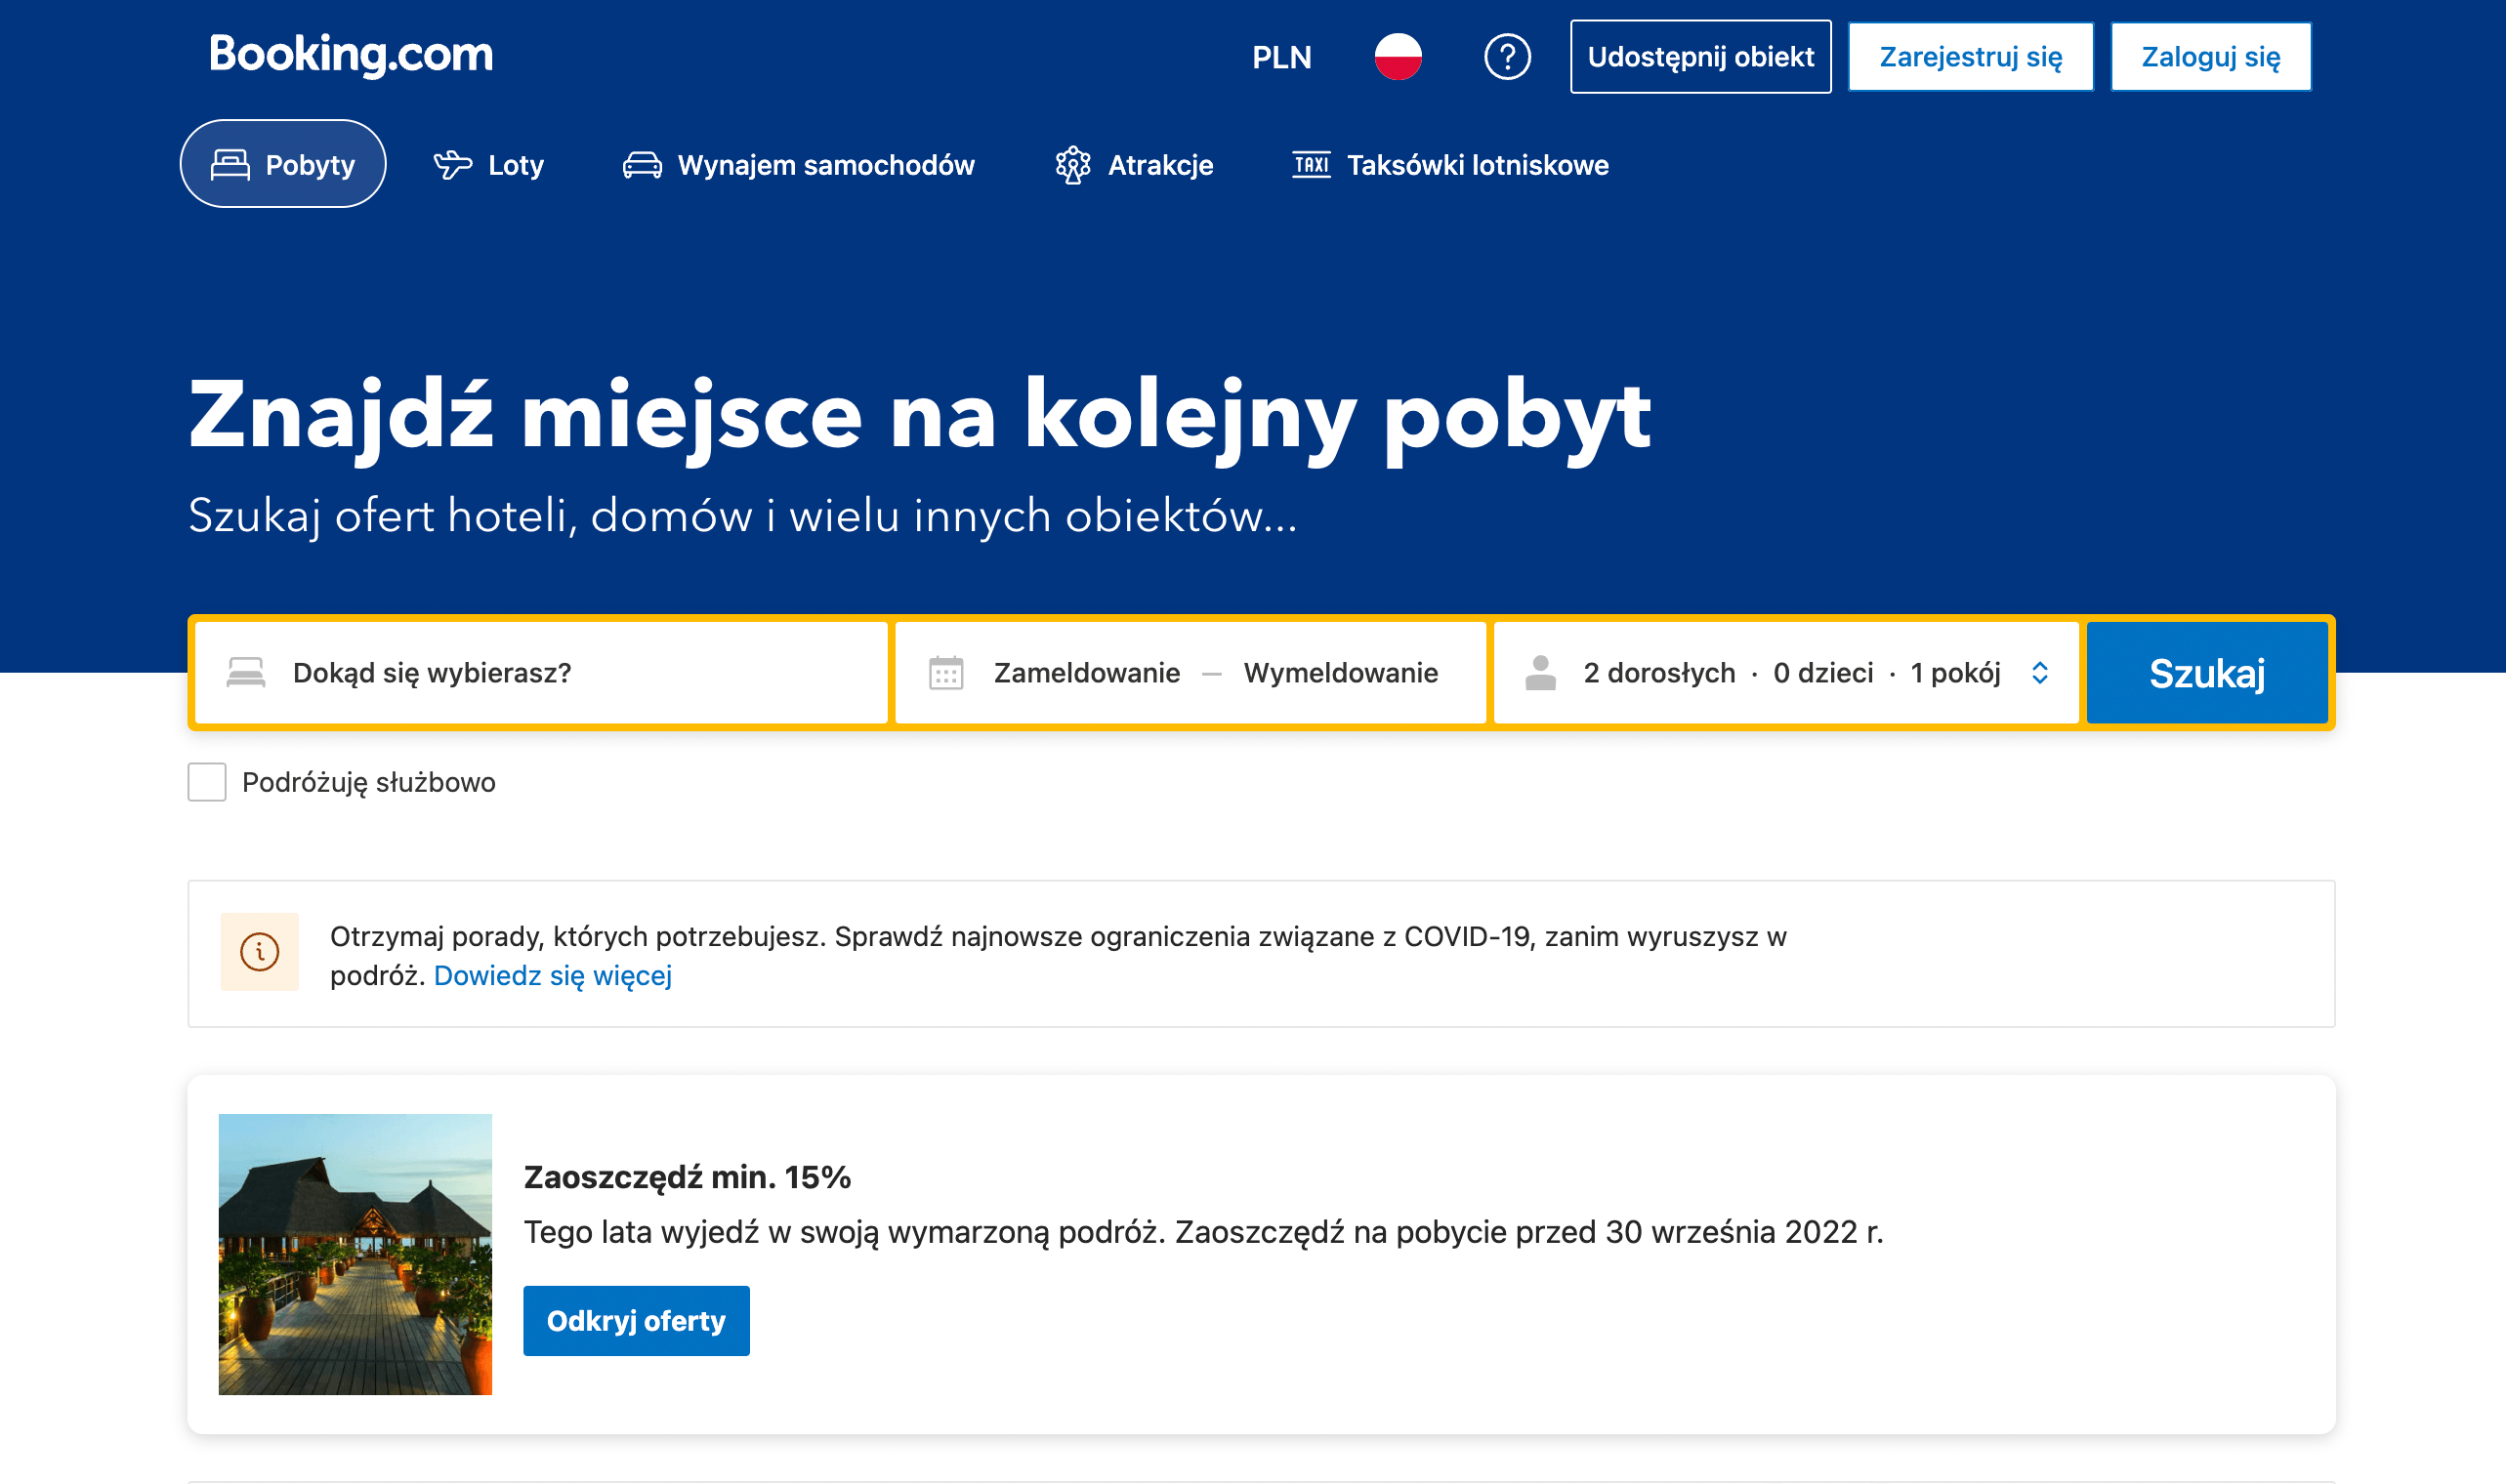 affiliate programs in Poland